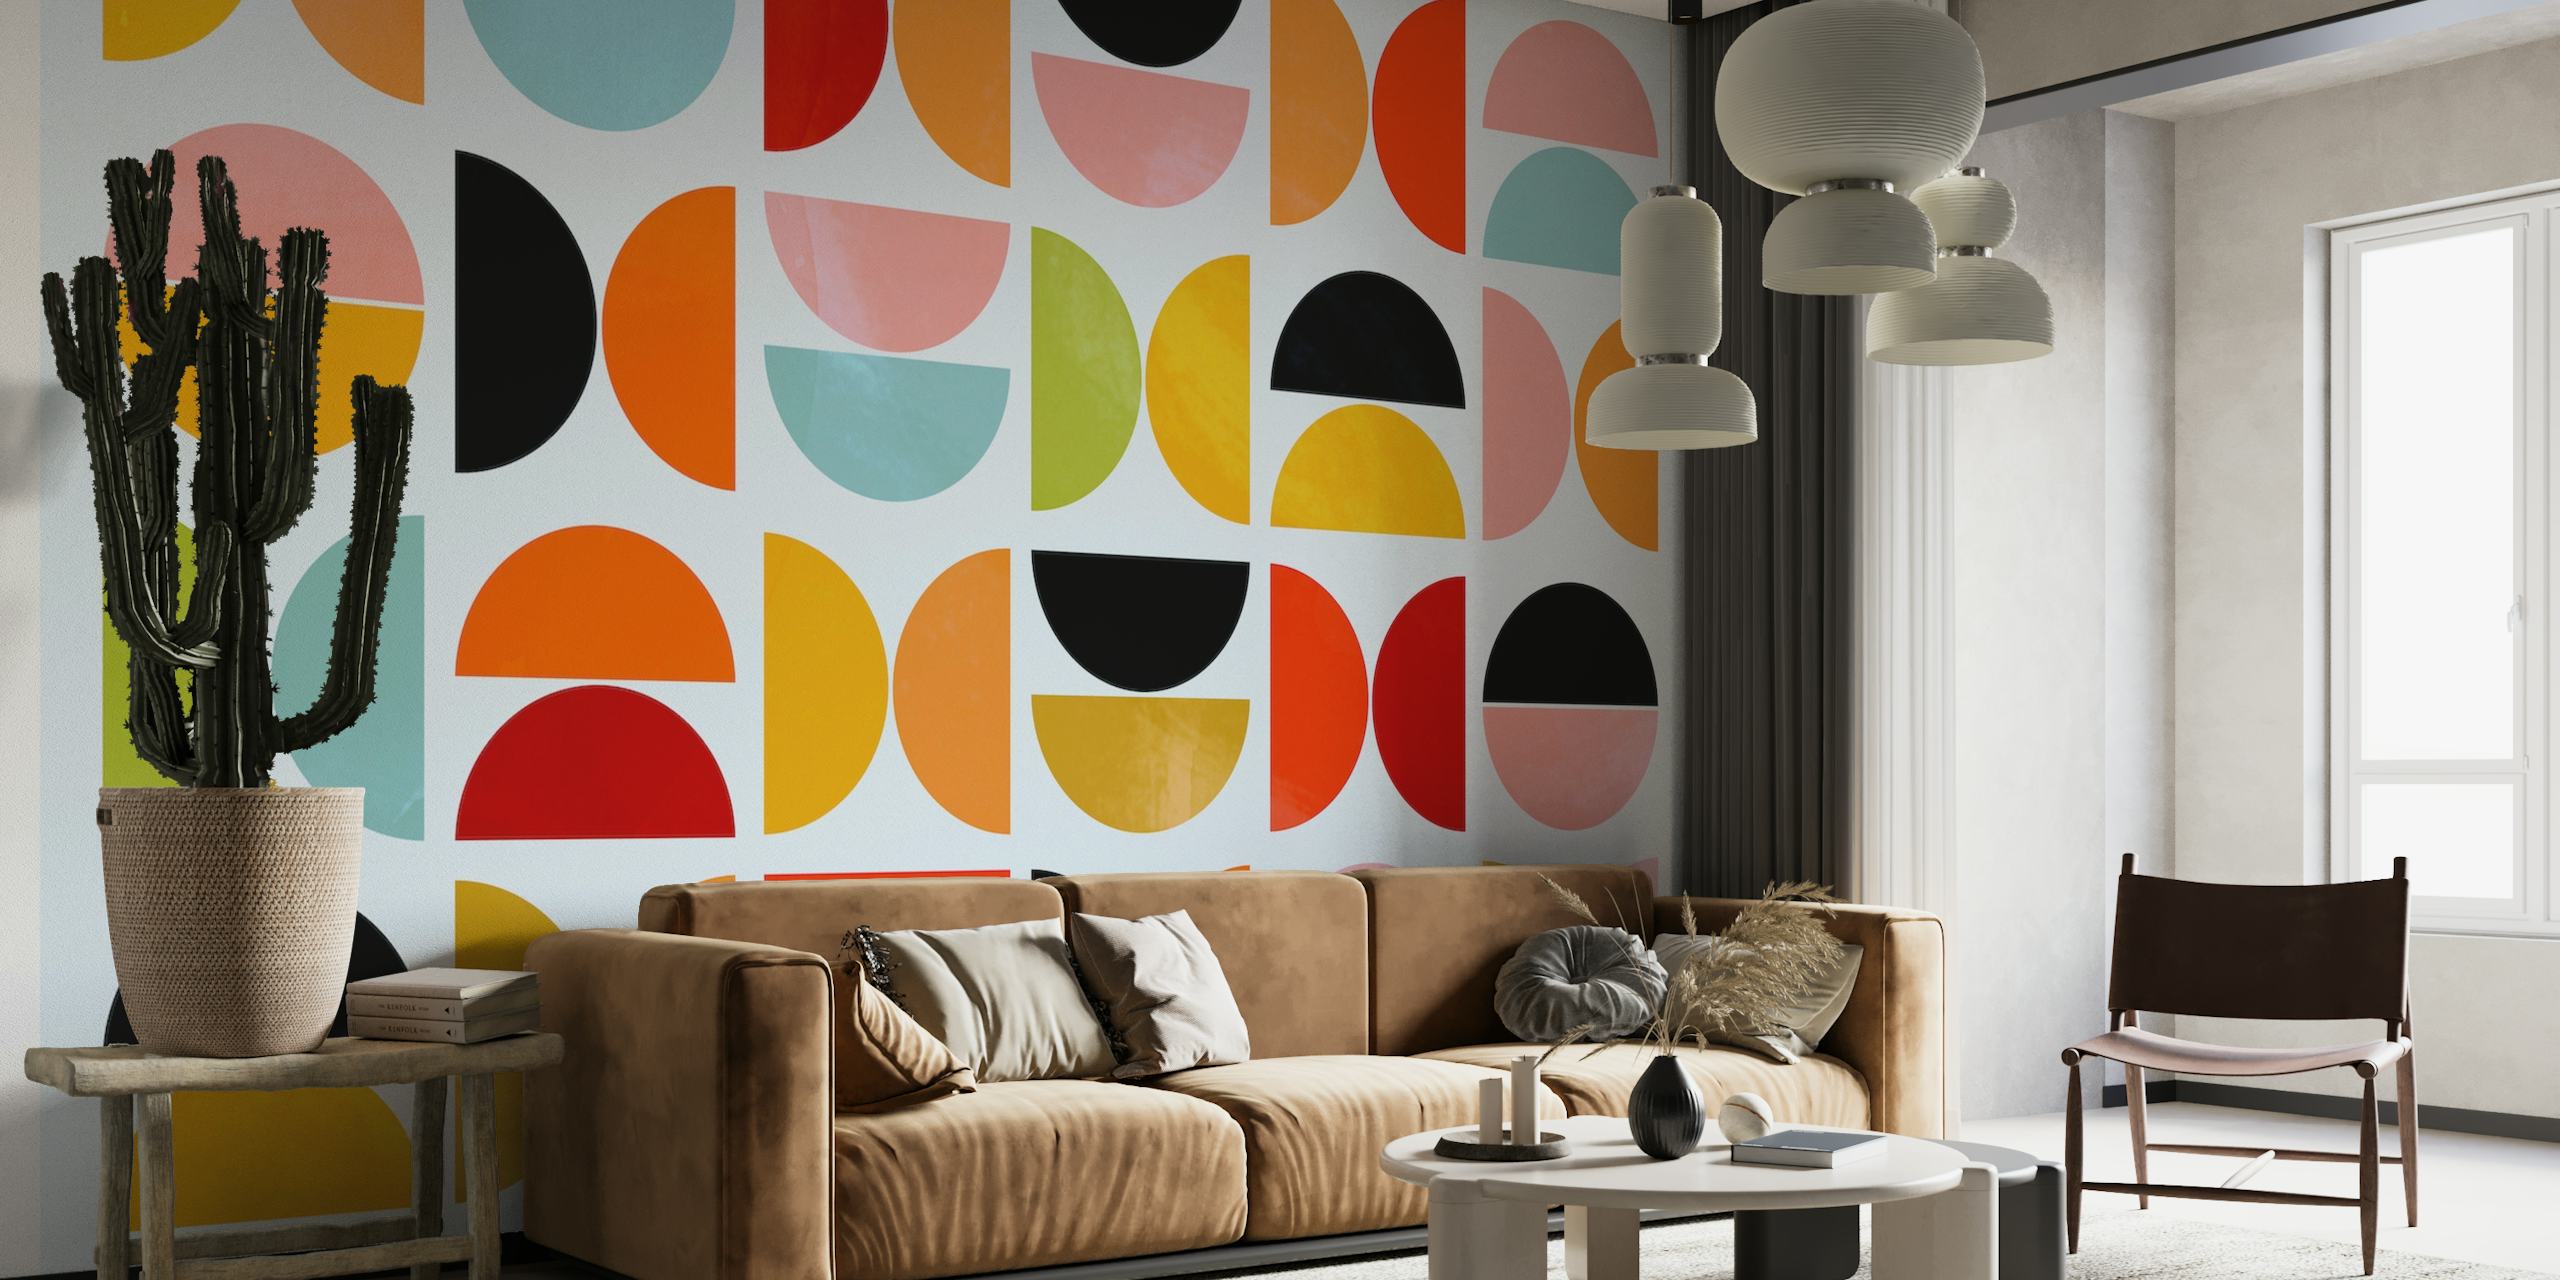 Vivid geometric shapes in a Bauhaus-inspired wall mural design.